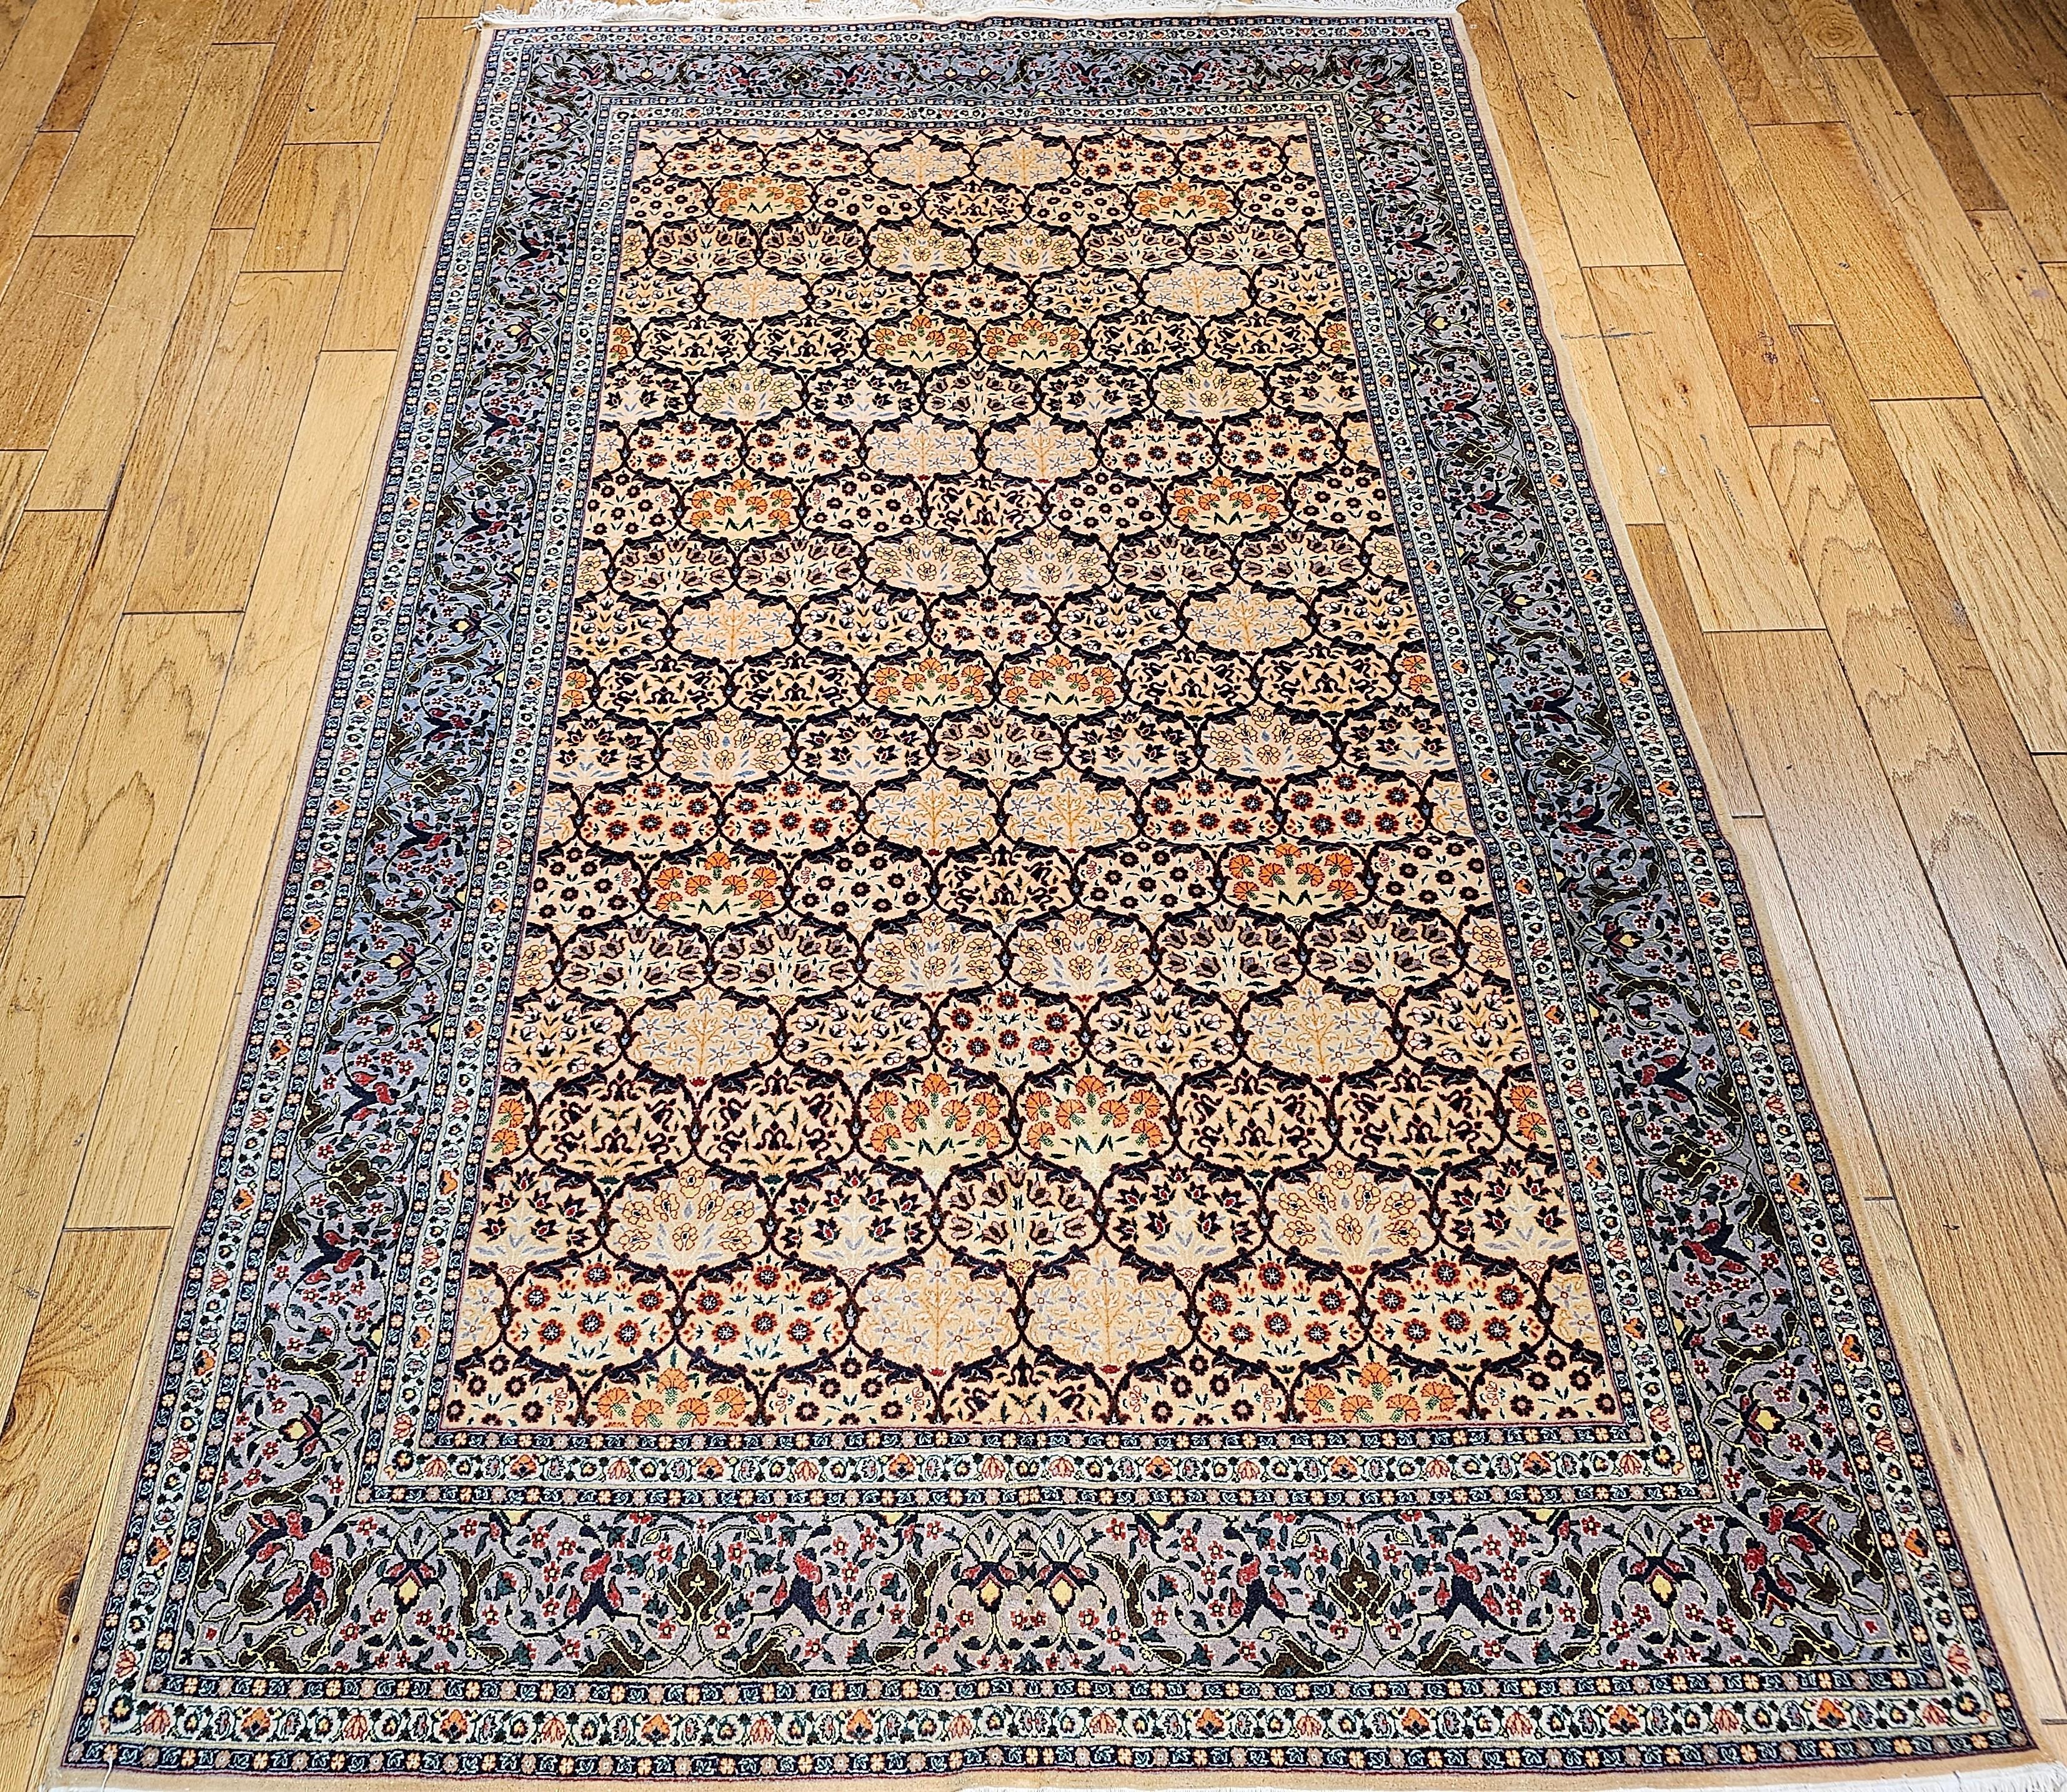 A vintage Turkish Hereke room size rug in a beautiful 